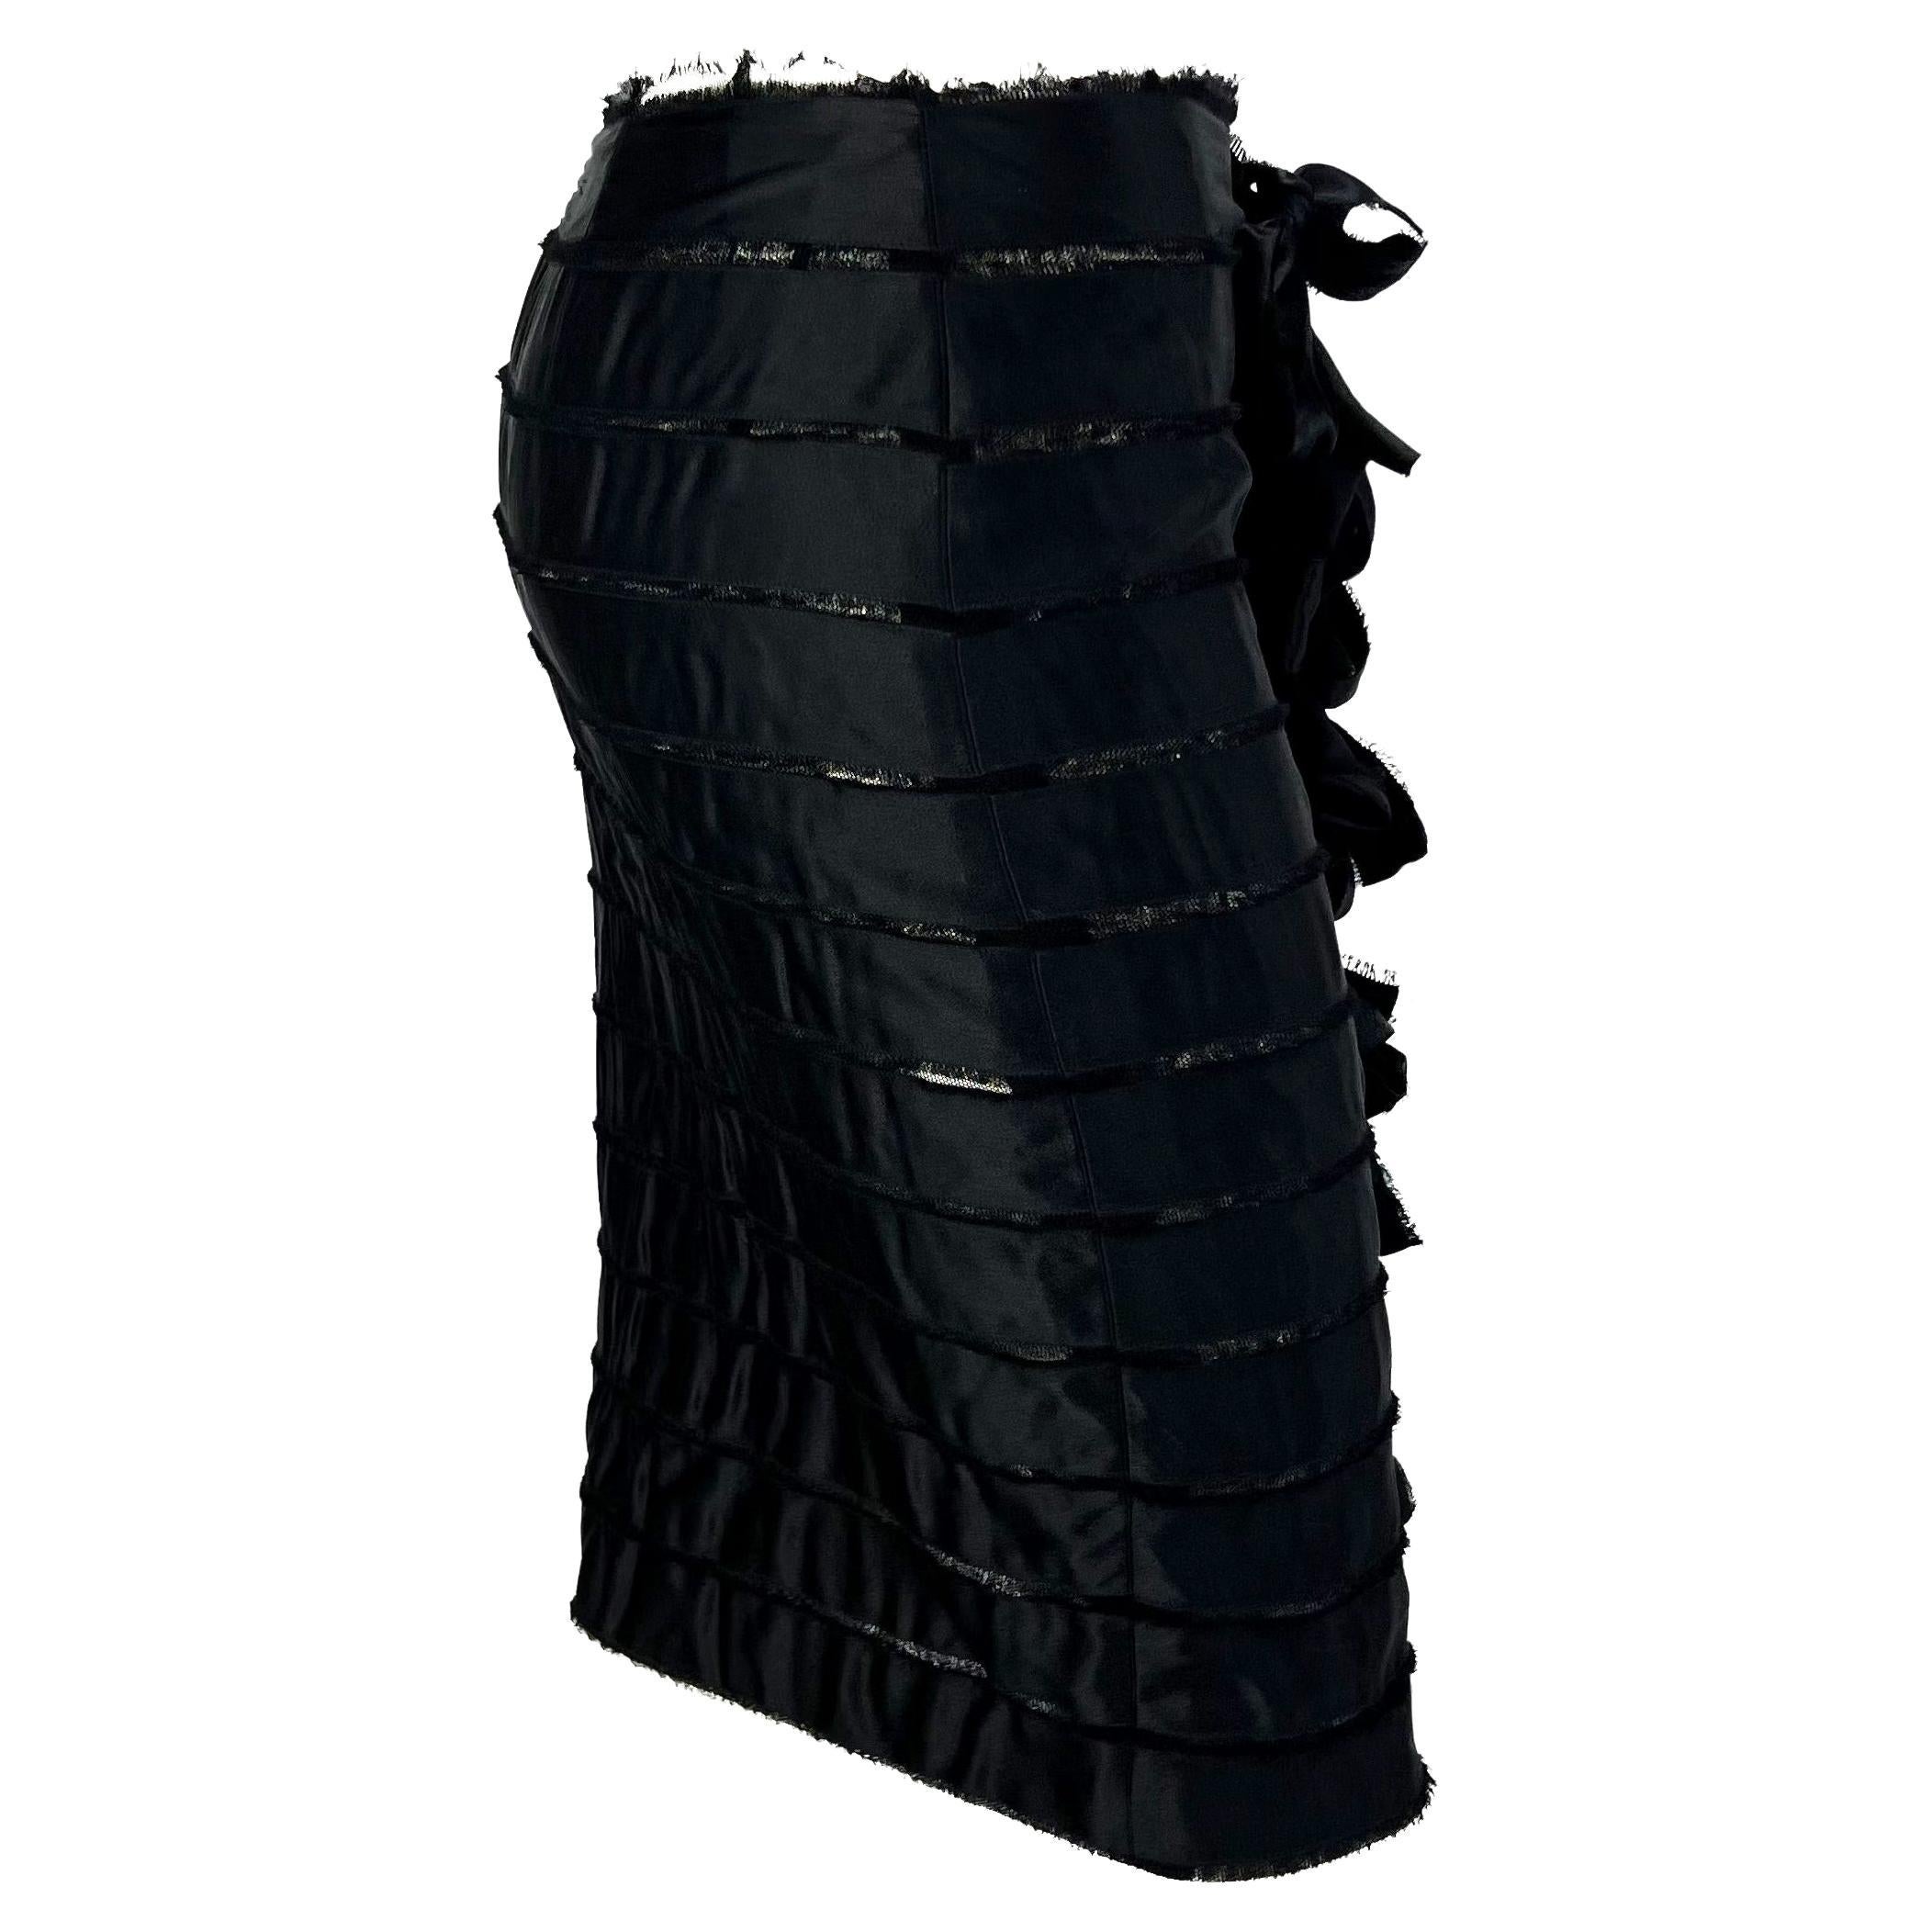 F/W 2002 Yves Saint Laurent by Tom Ford Runway Black Satin Ribbon Tulle Skirt For Sale 3